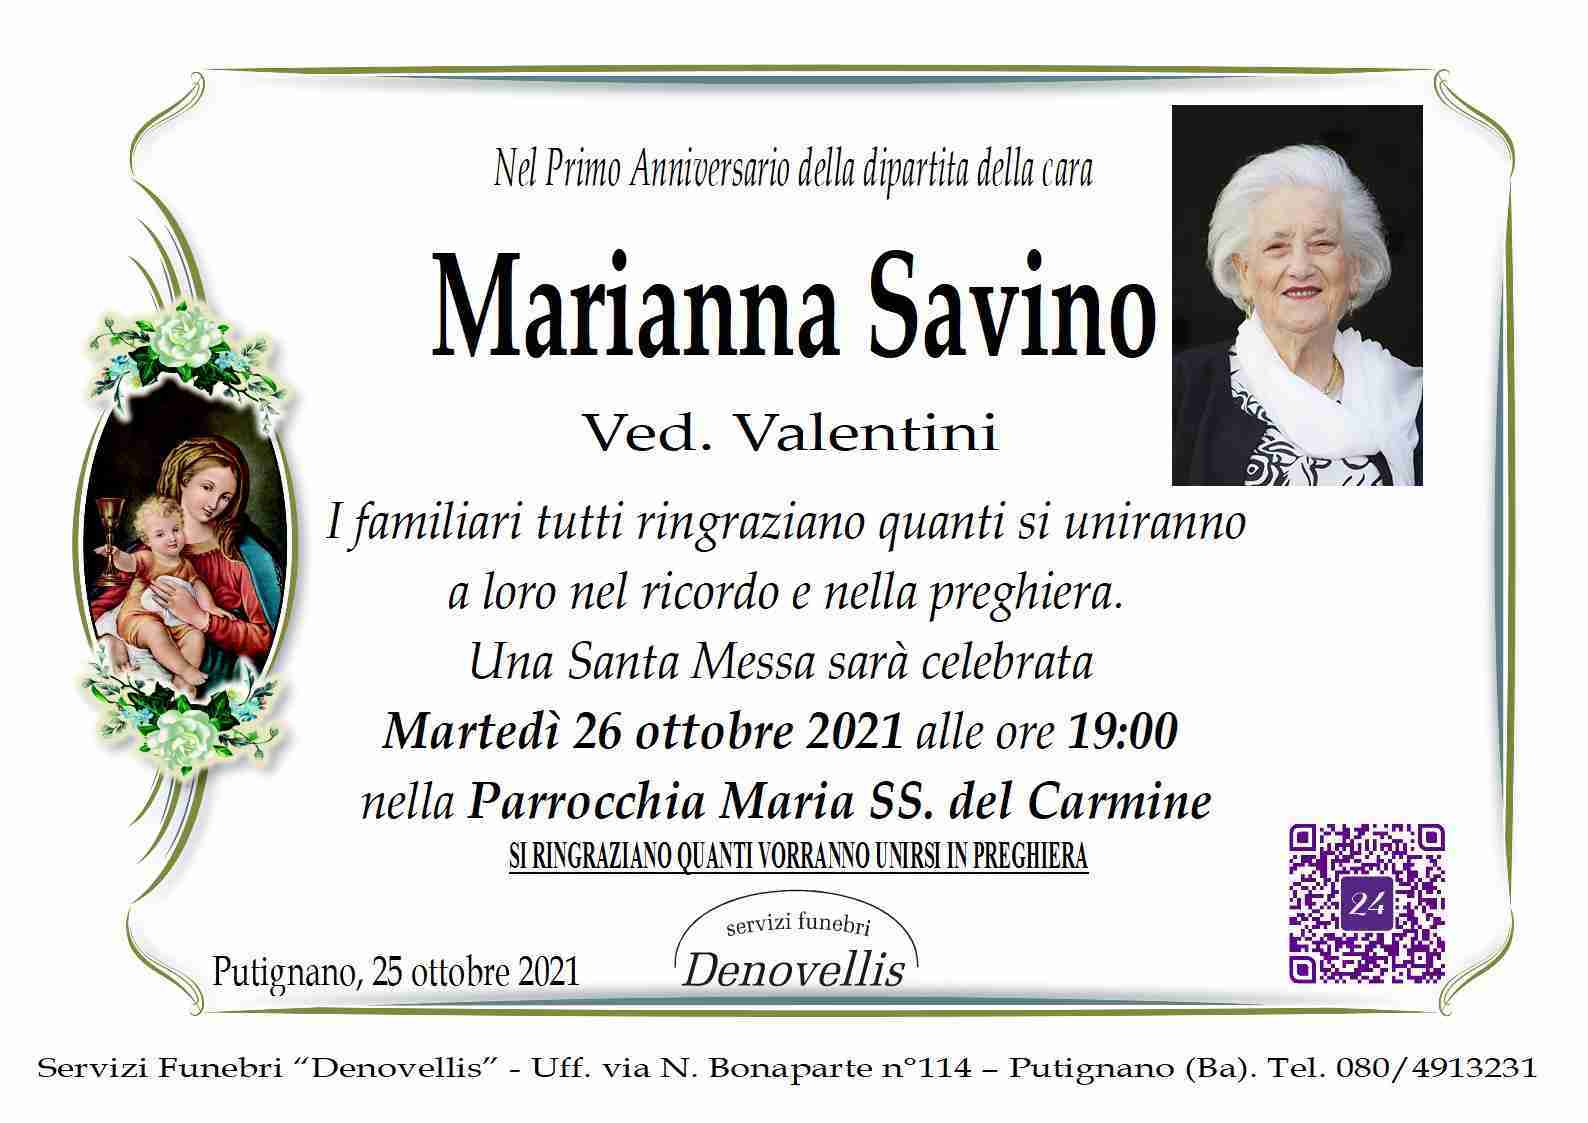 Marianna Savino